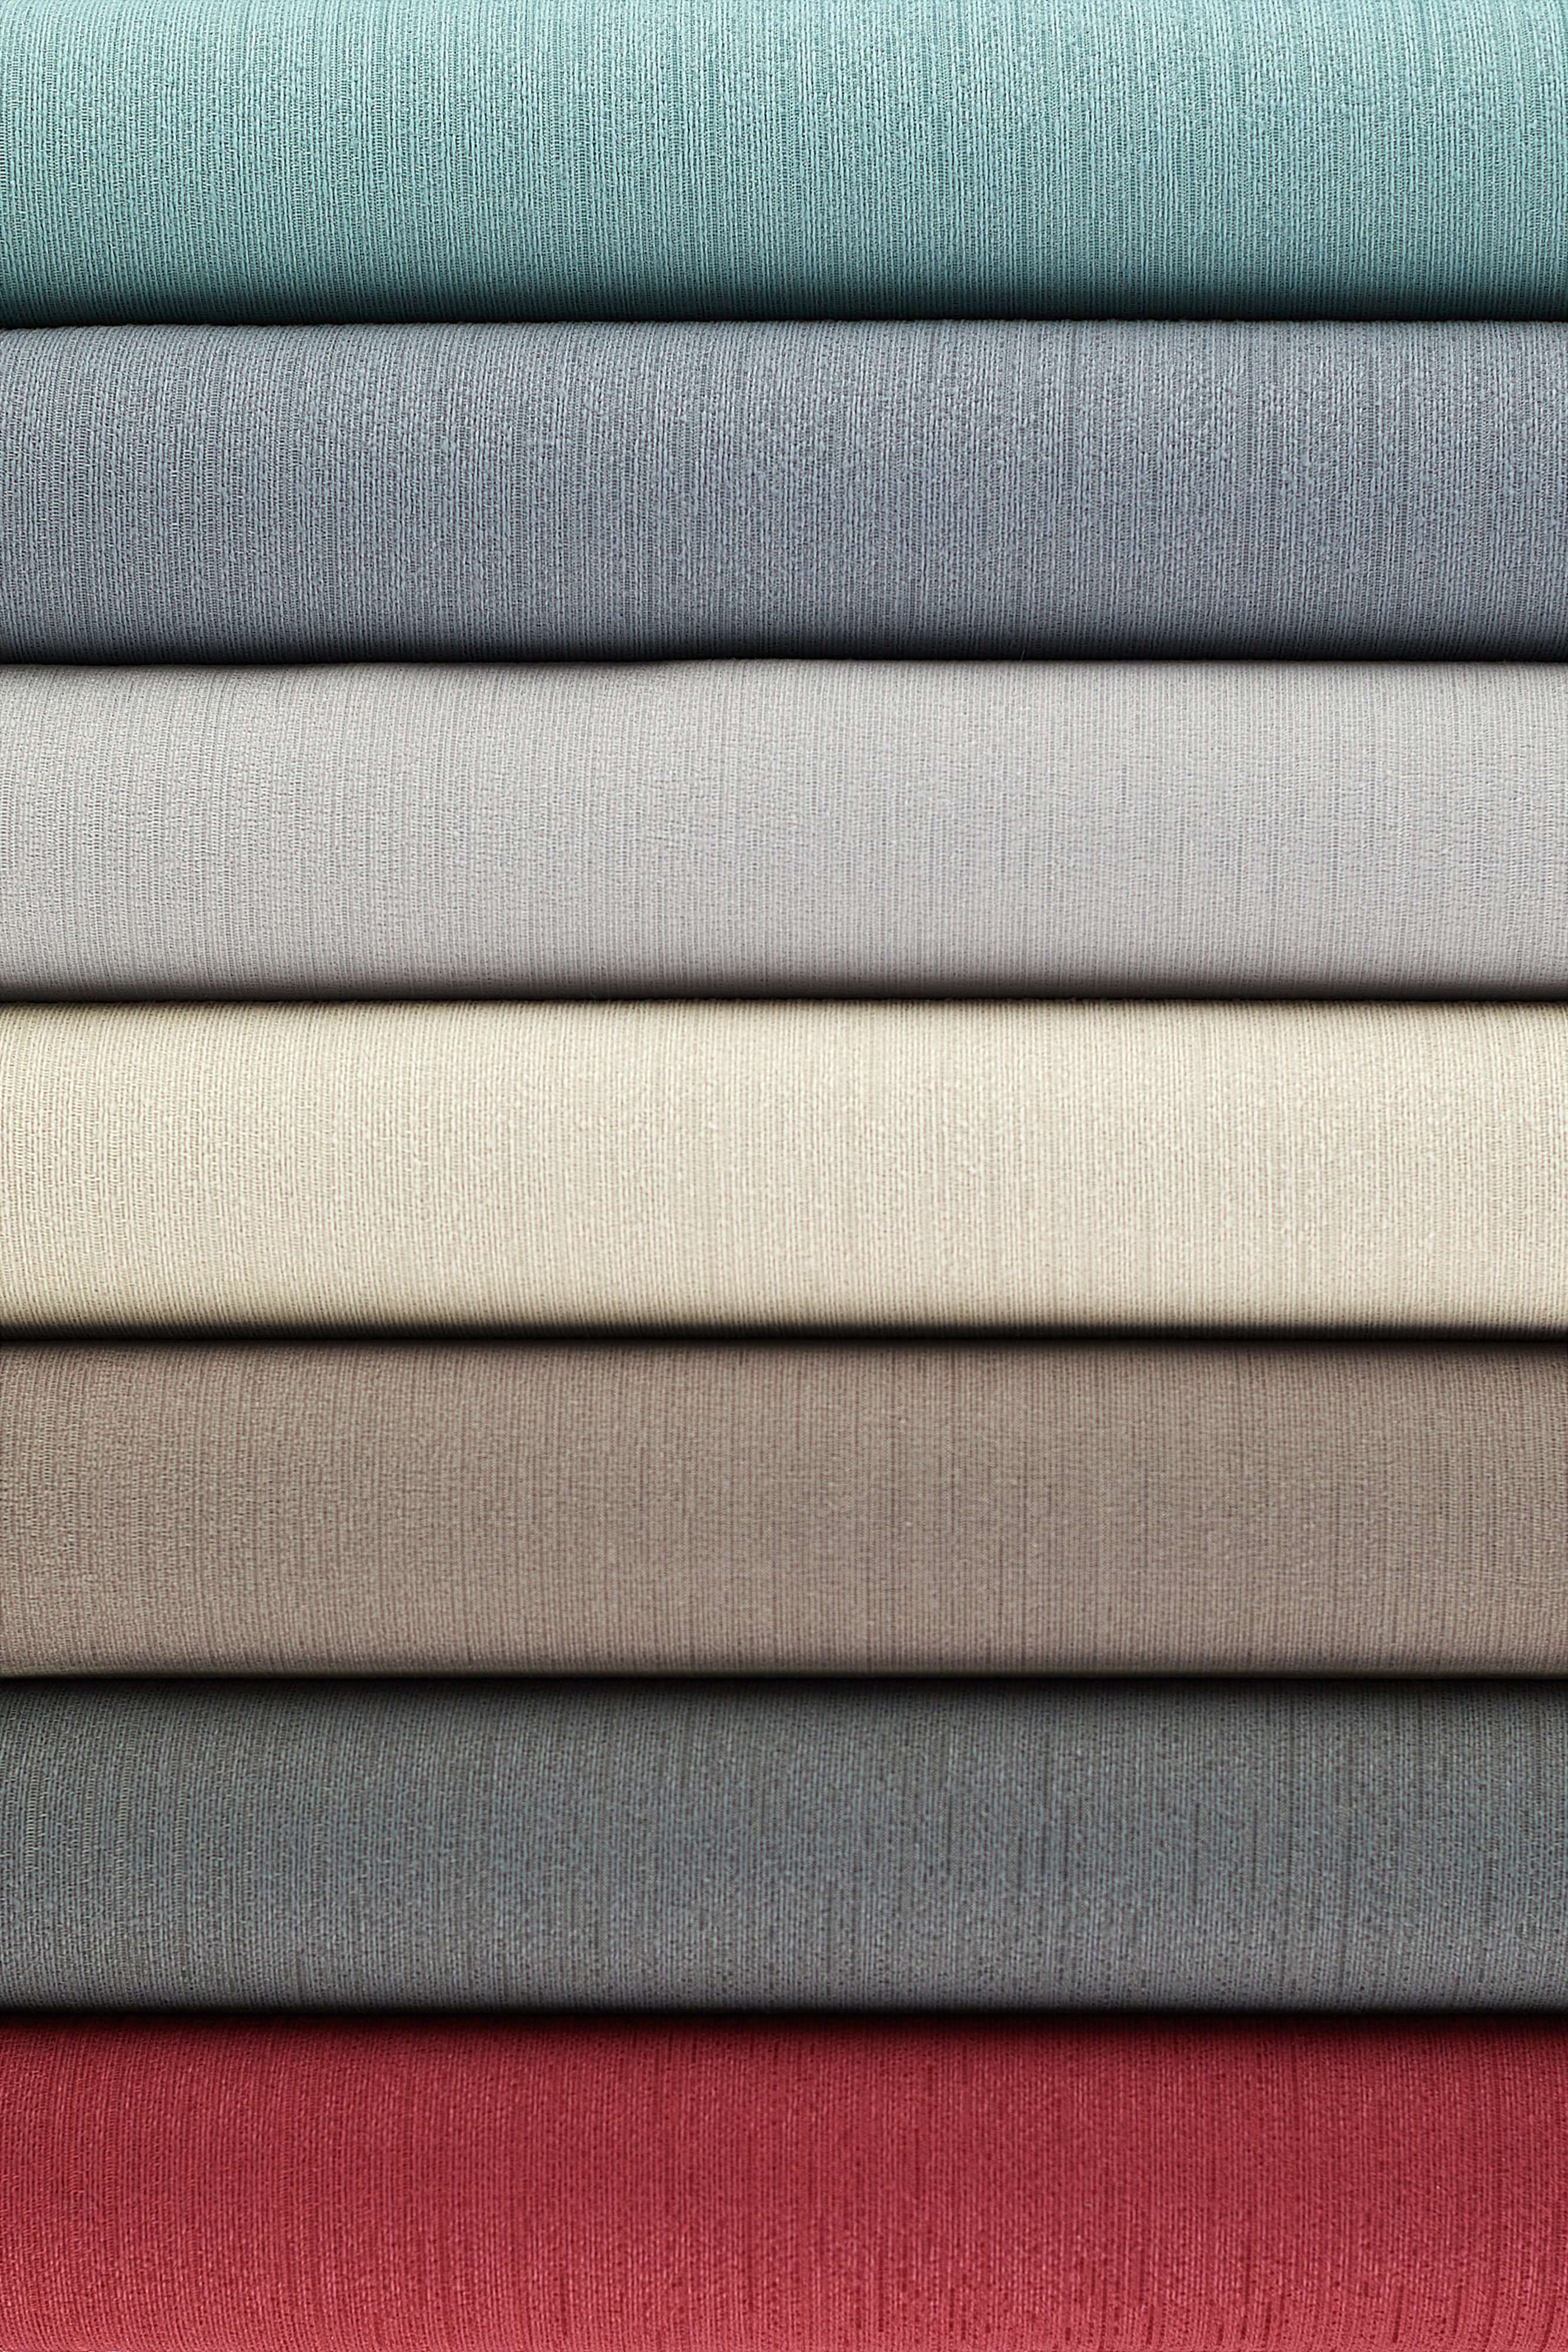 McAlister Textiles Sakai Smoke Blue FR Plain Fabric Fabrics 